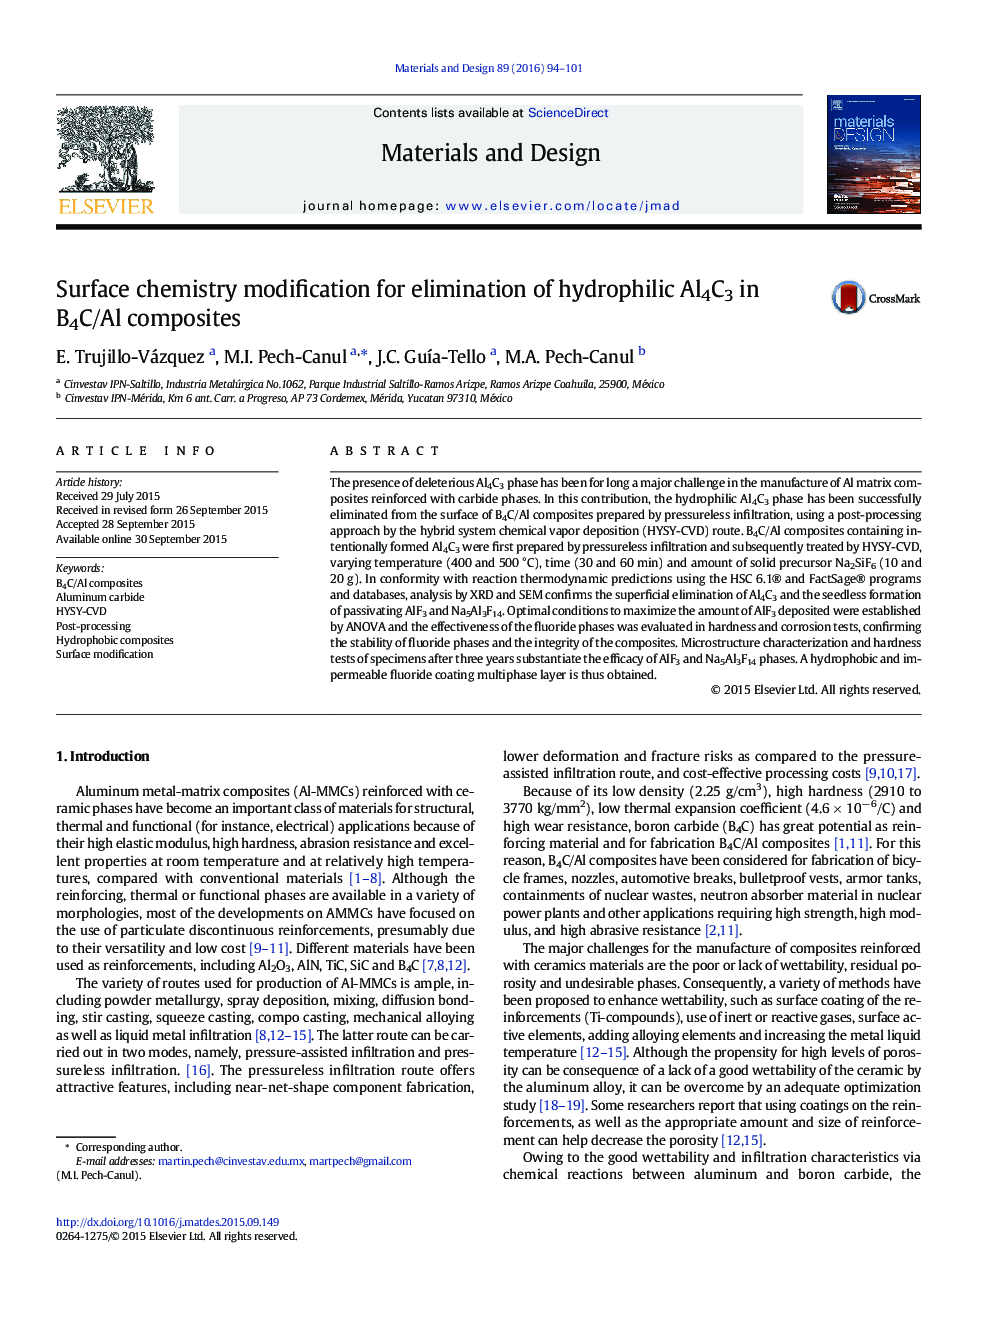 Surface chemistry modification for elimination of hydrophilic Al4C3 in B4C/Al composites